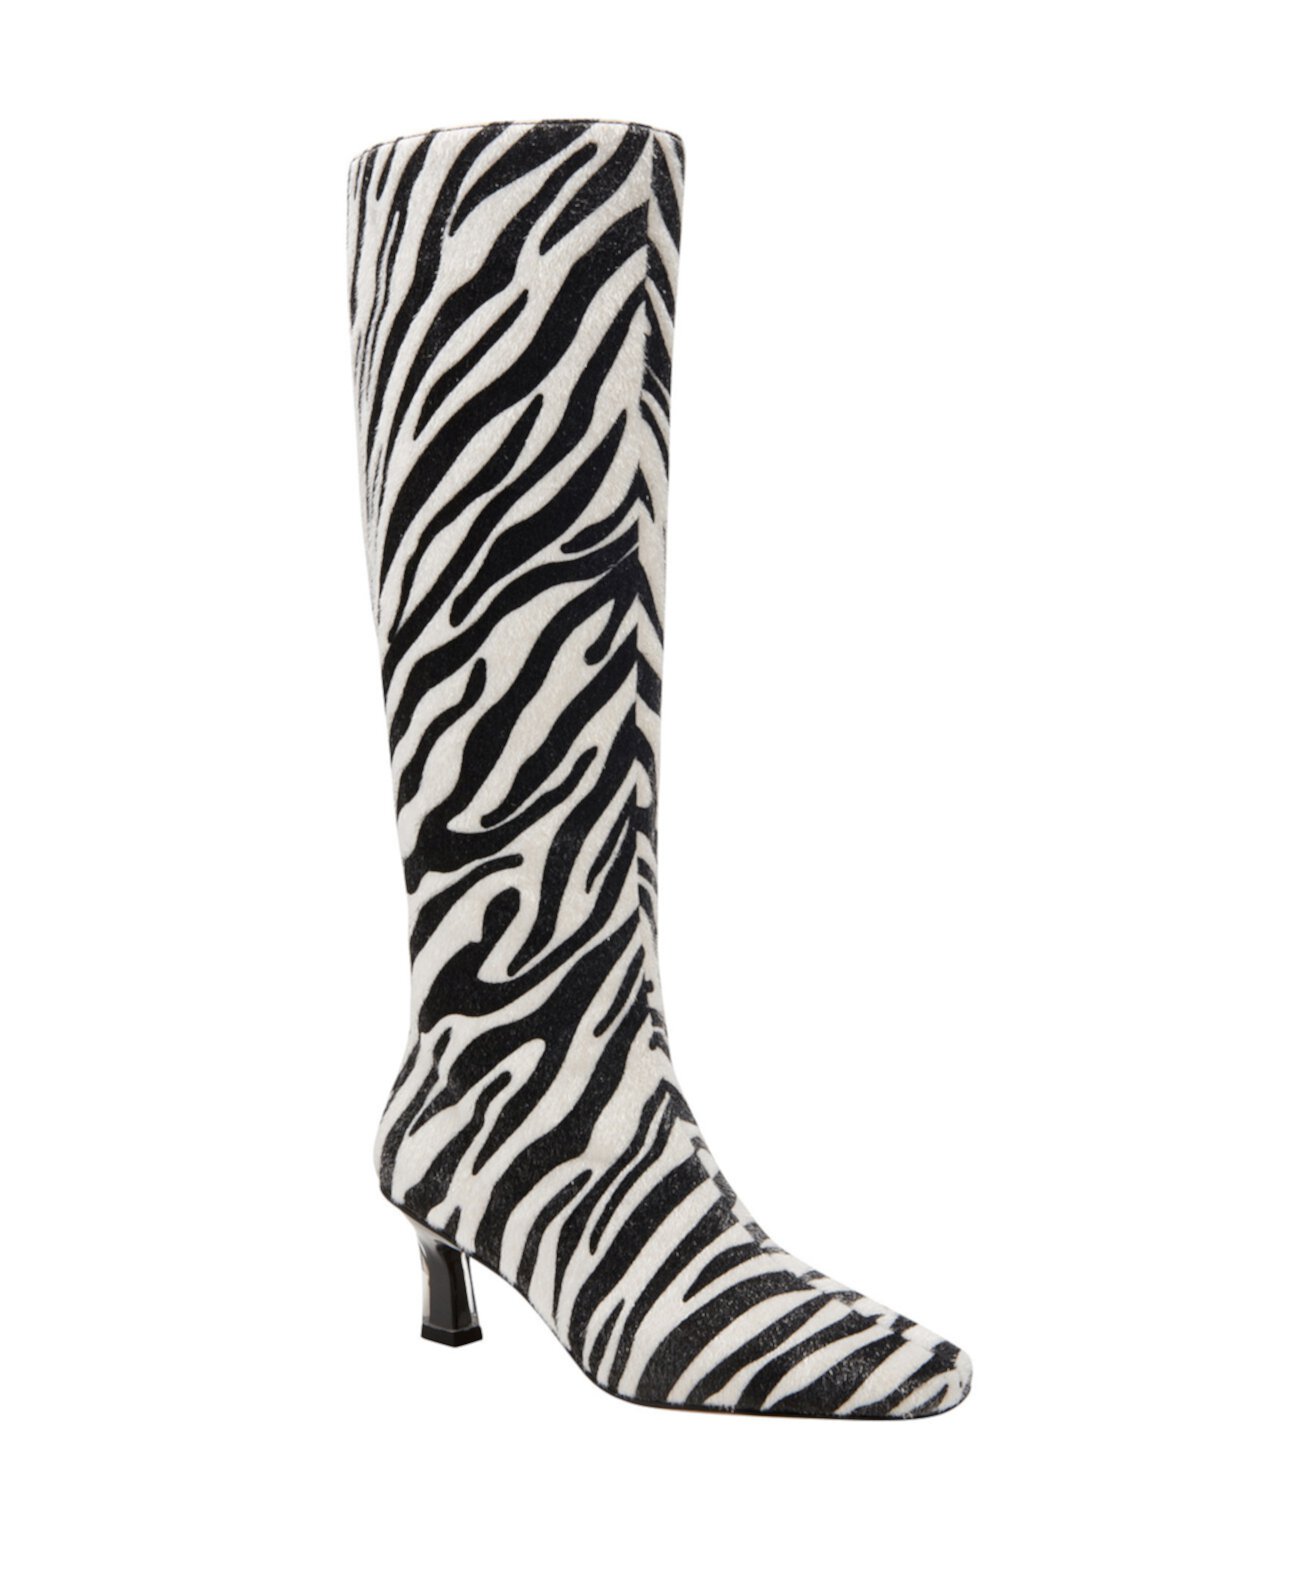 Женские ботинки на среднем каблуке с квадратным носком The Zaharrah Katy Perry